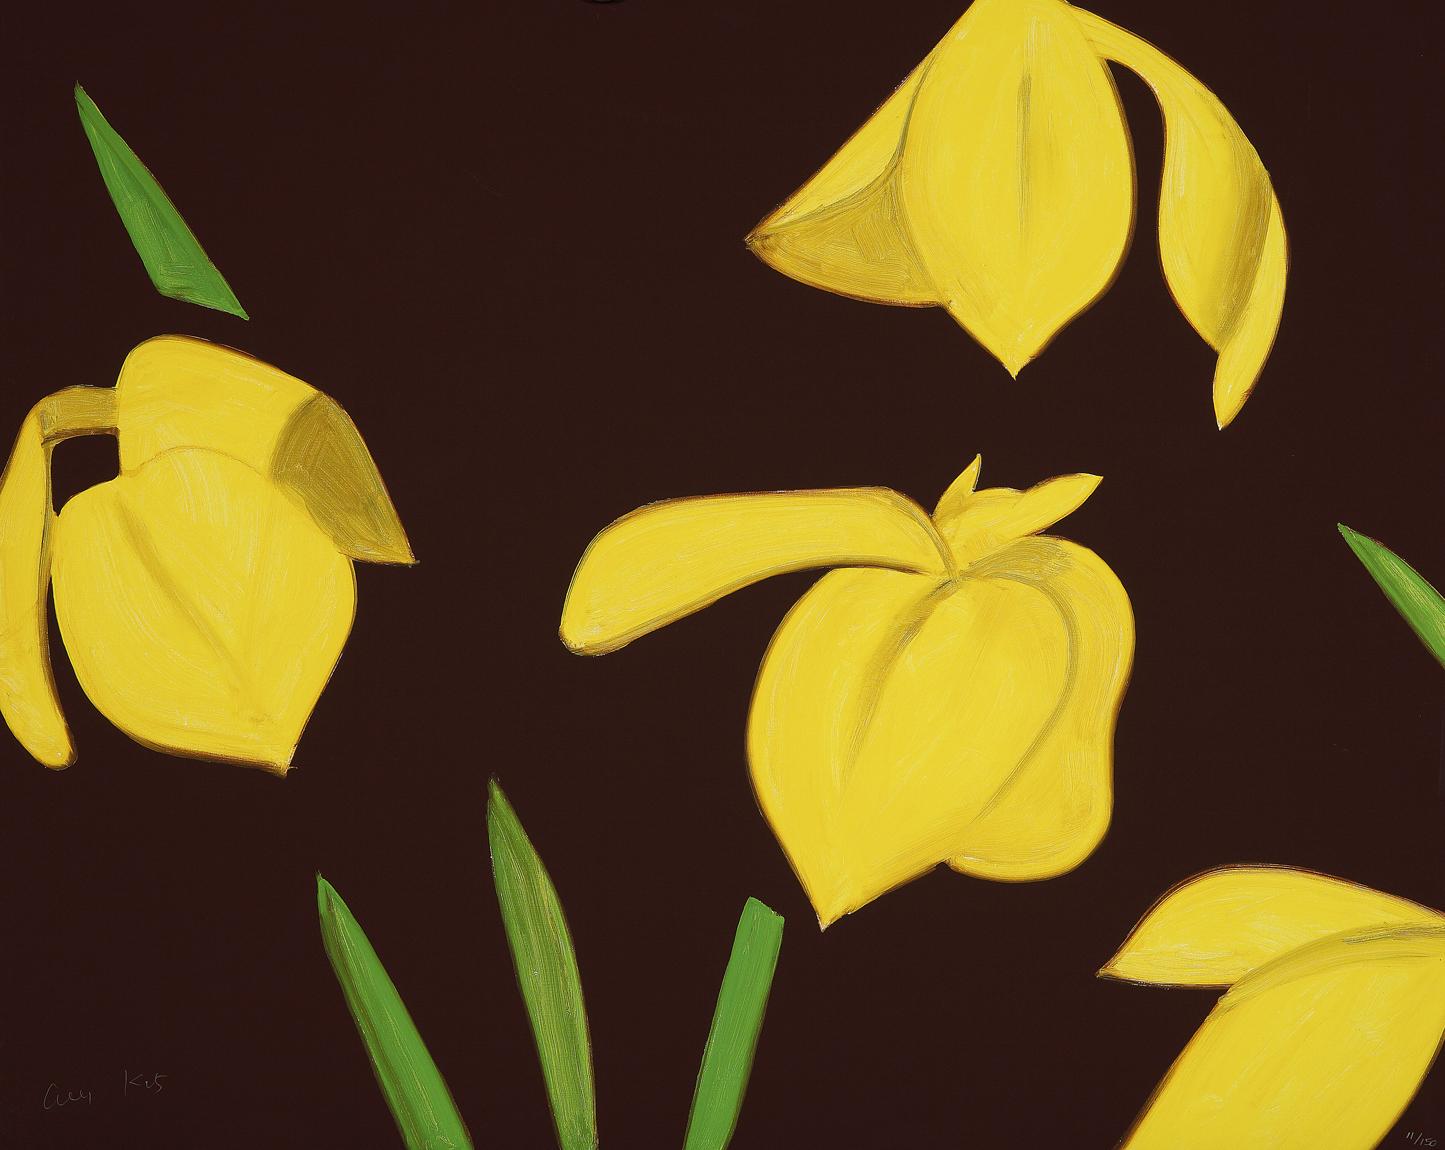 Alex Katz Landscape Print - "Yellow Flags on Brown", Flowers, Still life, Yellow, Brown